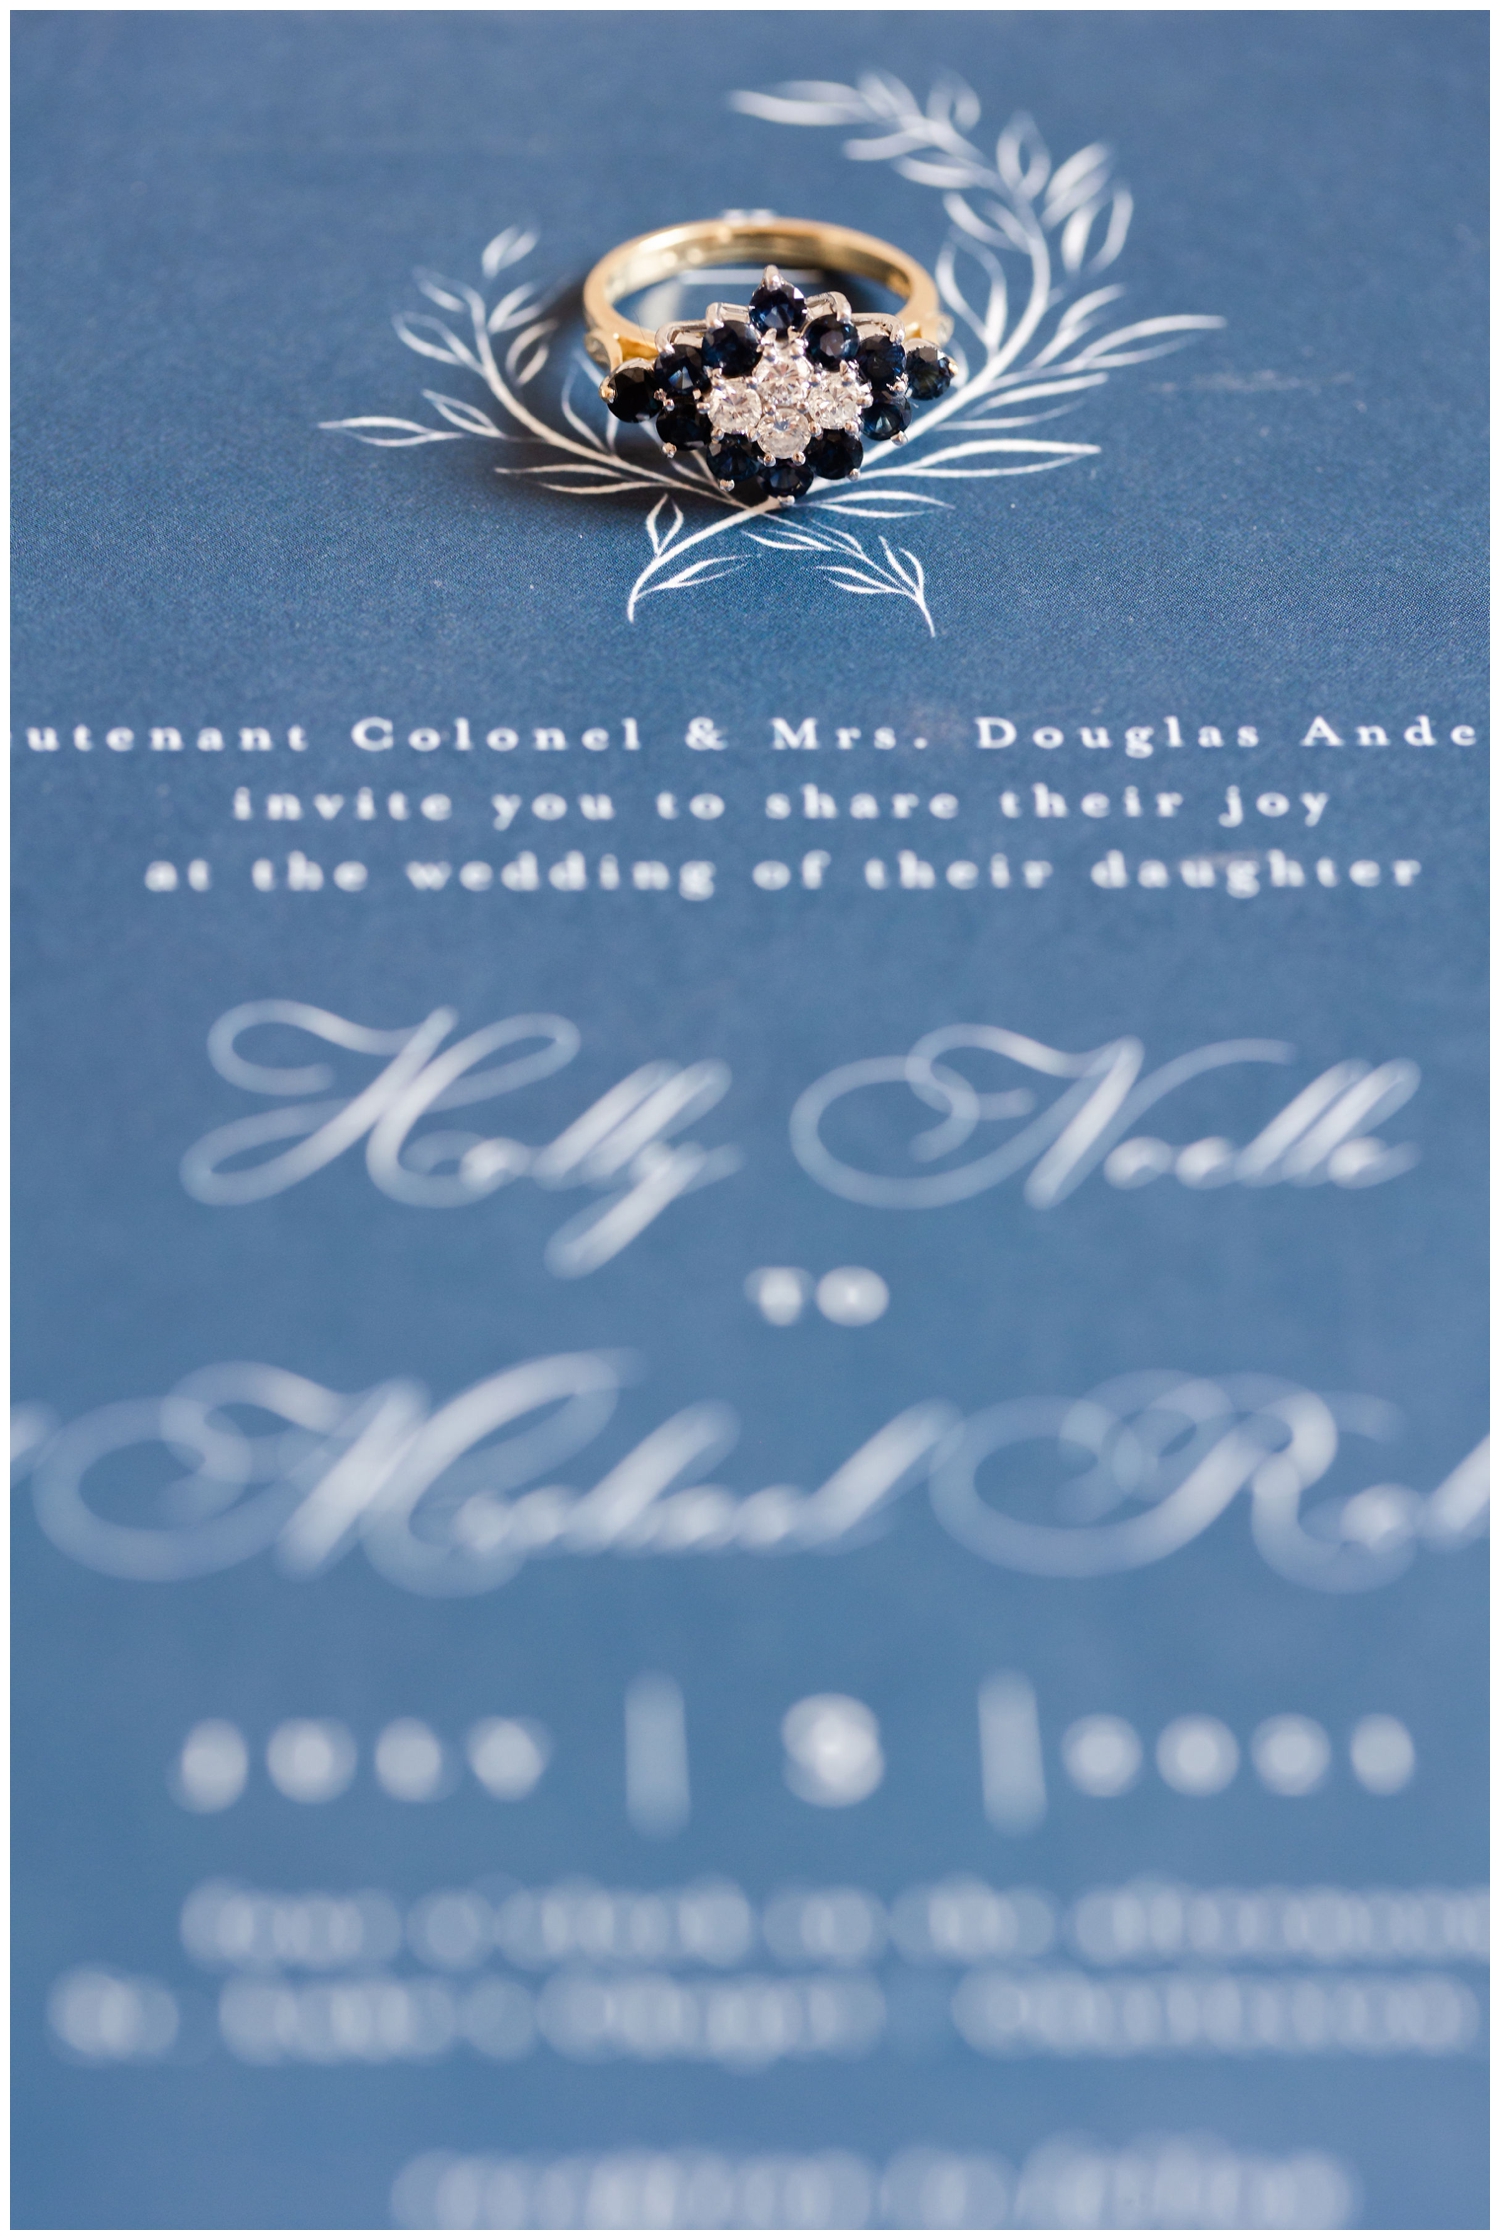 sapphire wedding ring on blue invitation suite